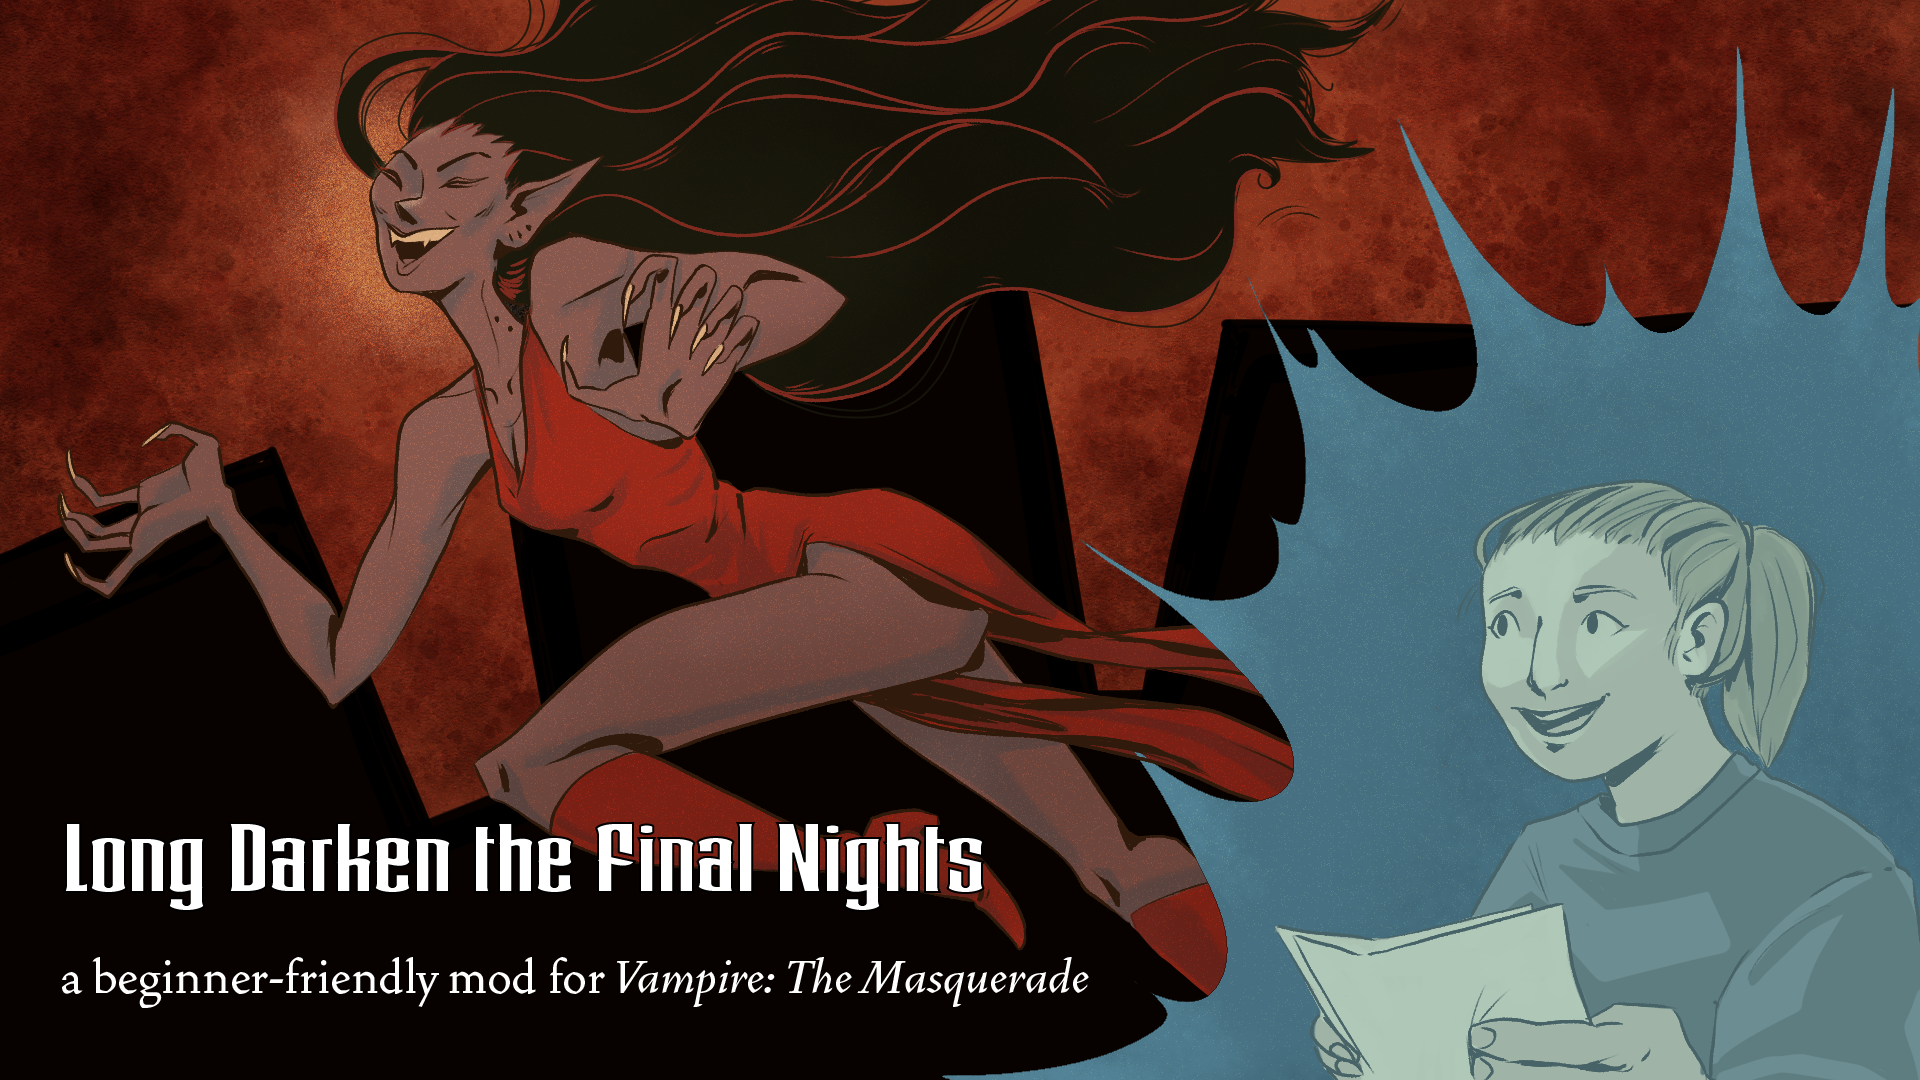 Vampire: The Masquerade Revised by Mark Rein-Hagen